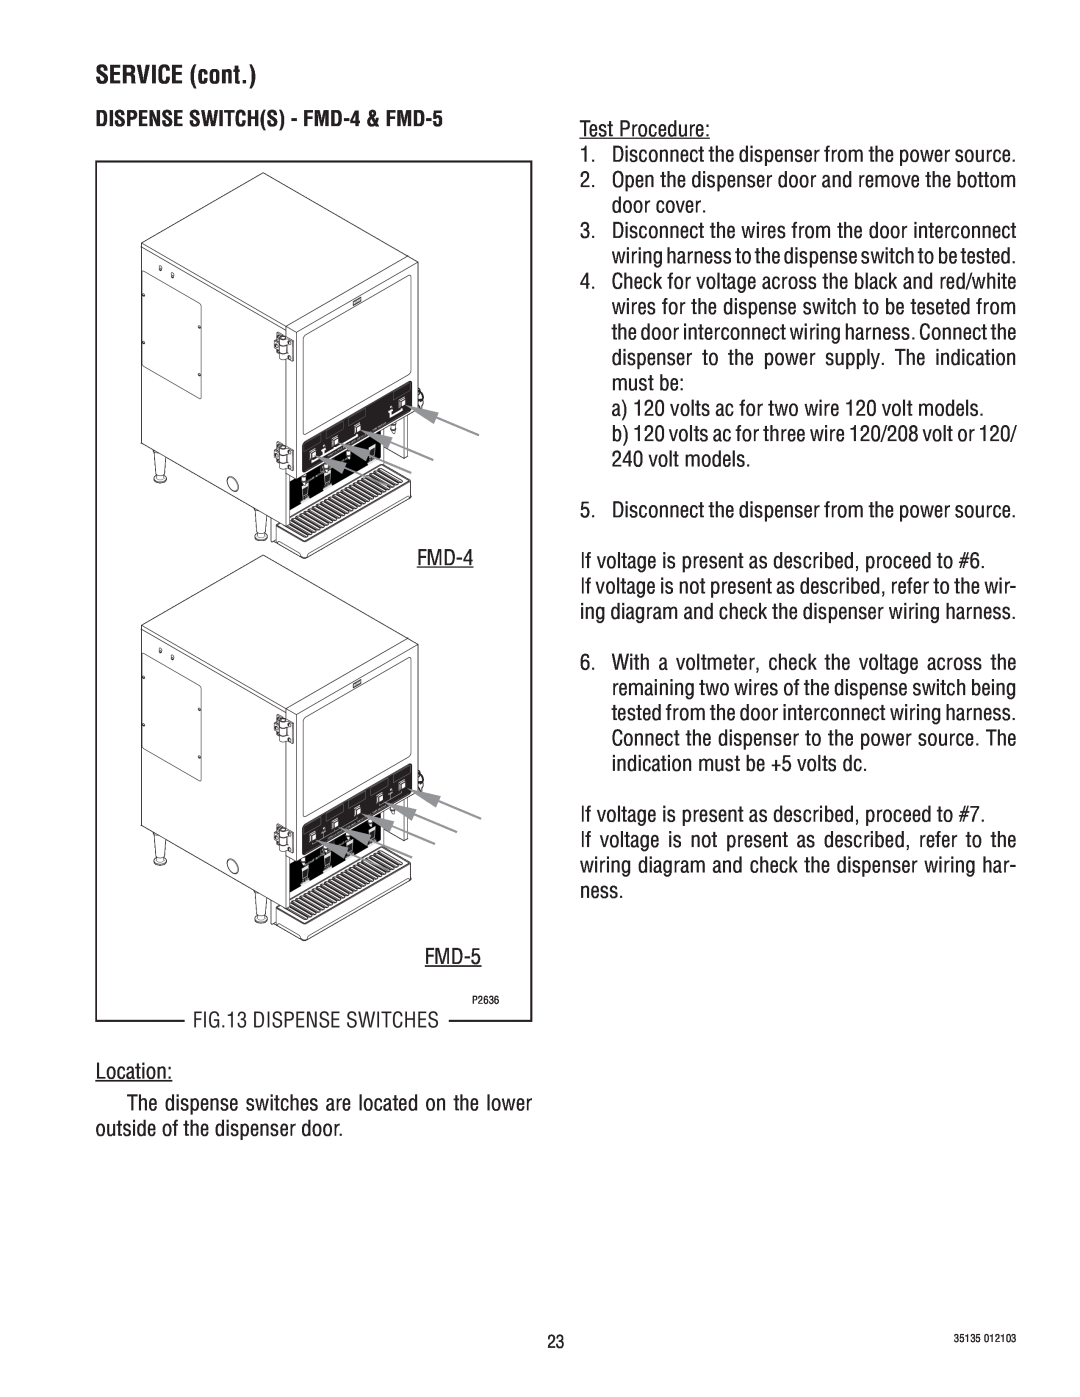 Bunn service manual DISPENSE SWITCHS - FMD-4& FMD-5, Dispense Switches, SERVICE cont, Location 